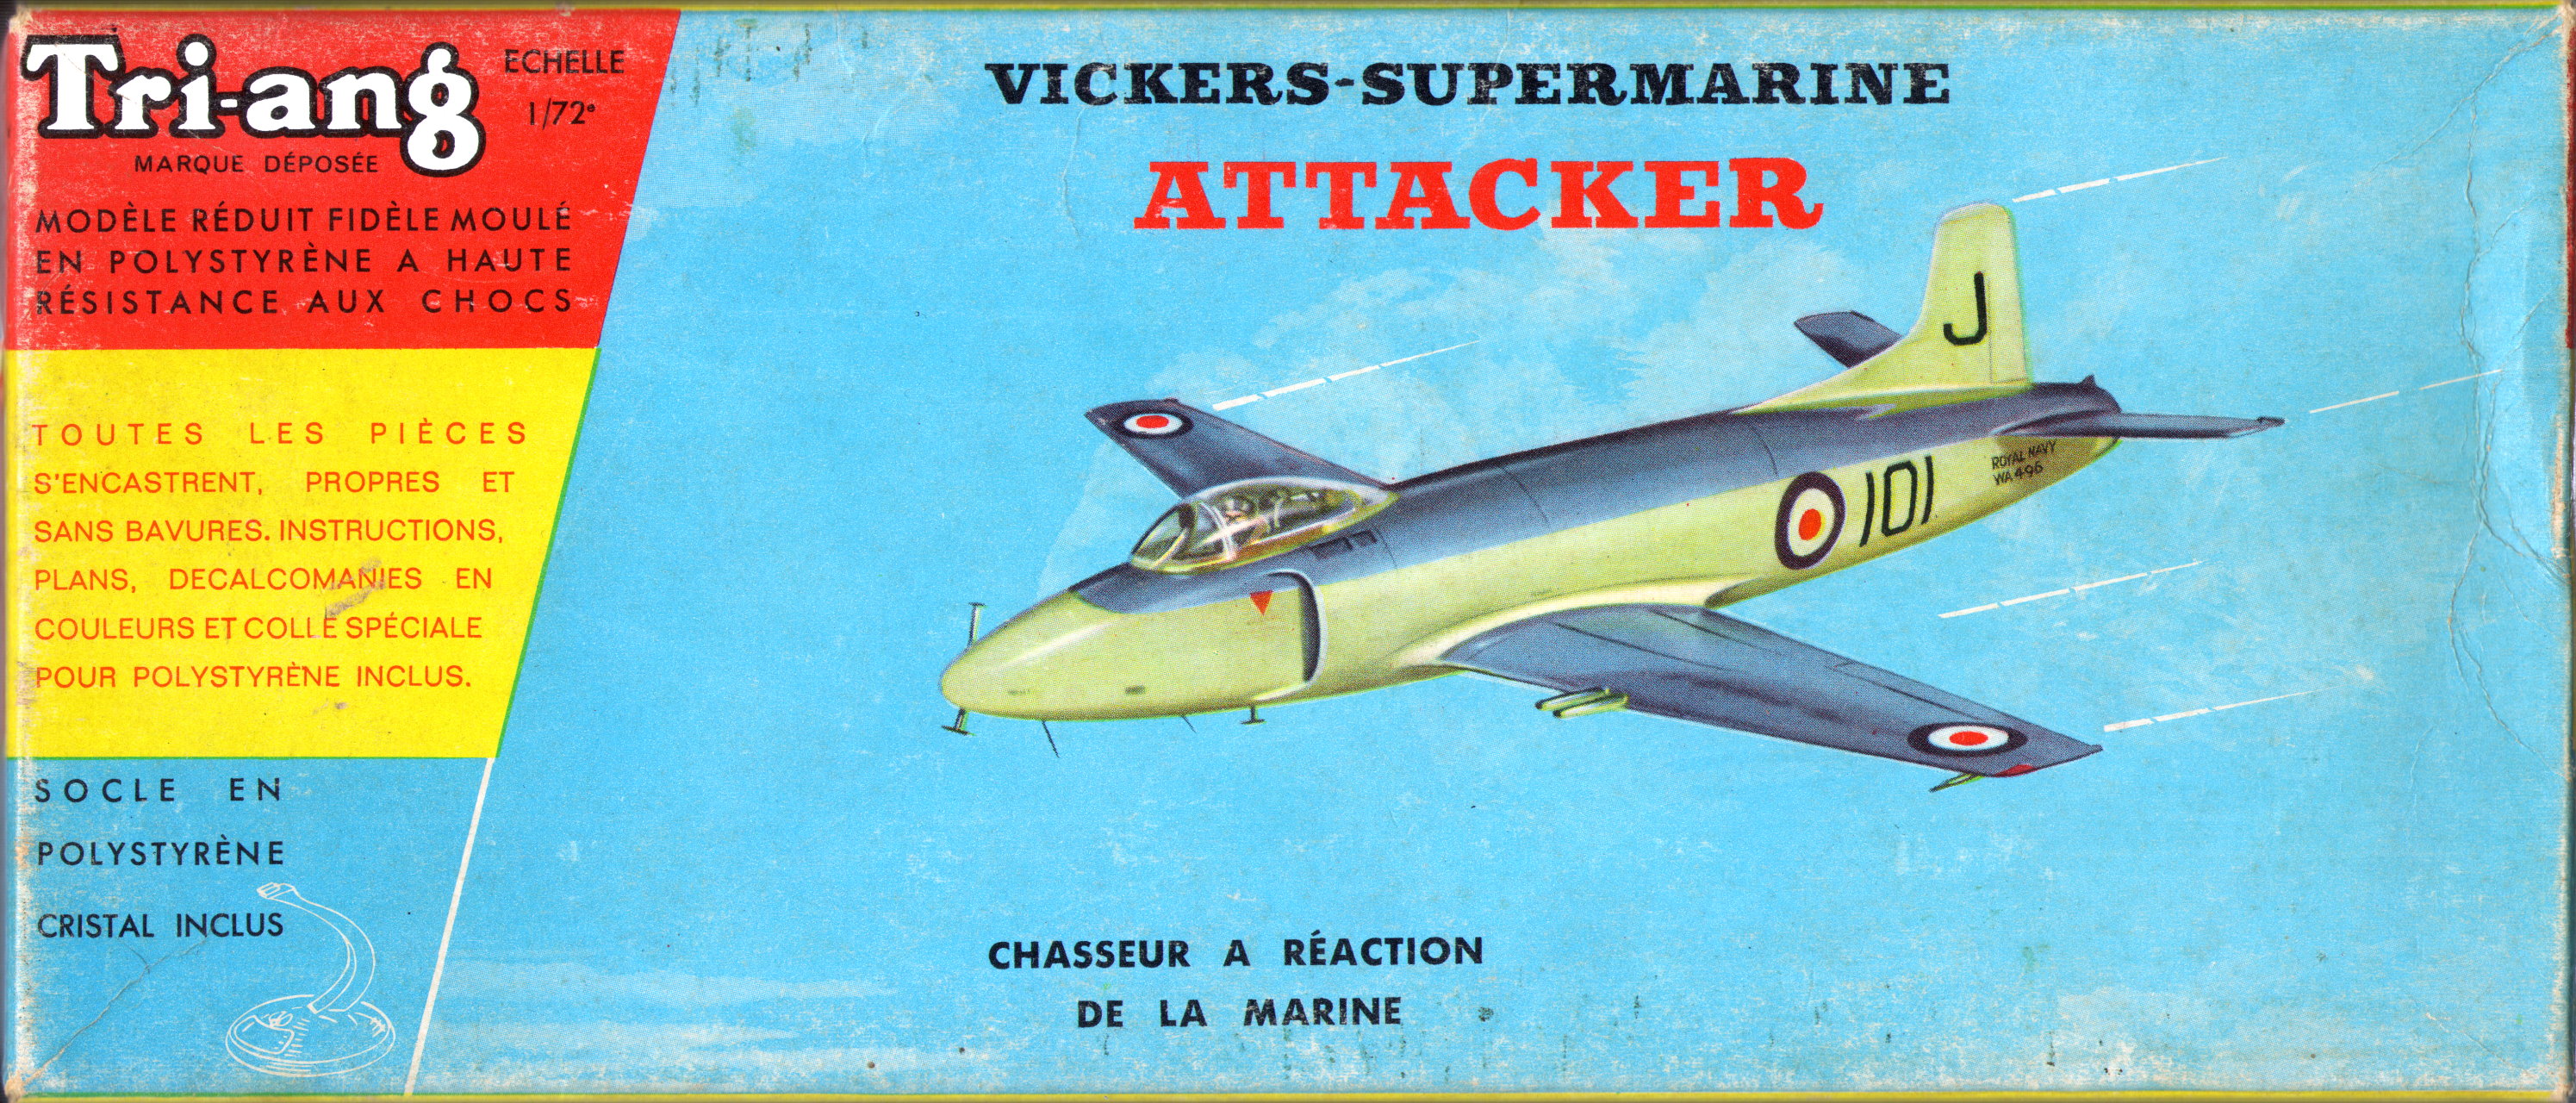 Tri-ang 330P Vickers-Supermarine Attacker chasseur à réaction de la marine, Lines Freres SA, Calais, 1961, box